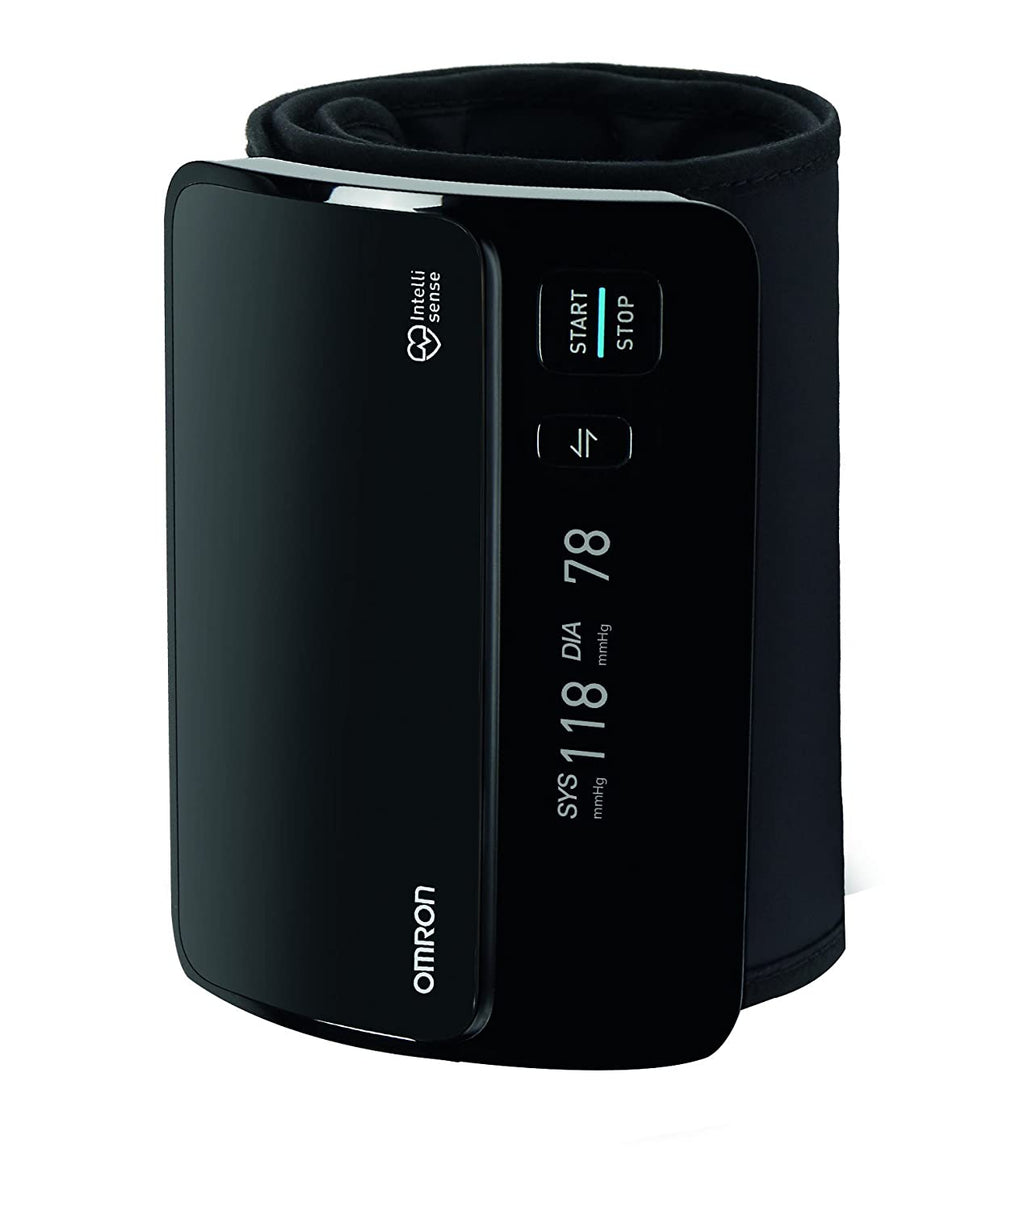 Omron Smart Elite+ HEM 7600T Tubeless 360° Accurate Digital Blood Pressure monitor